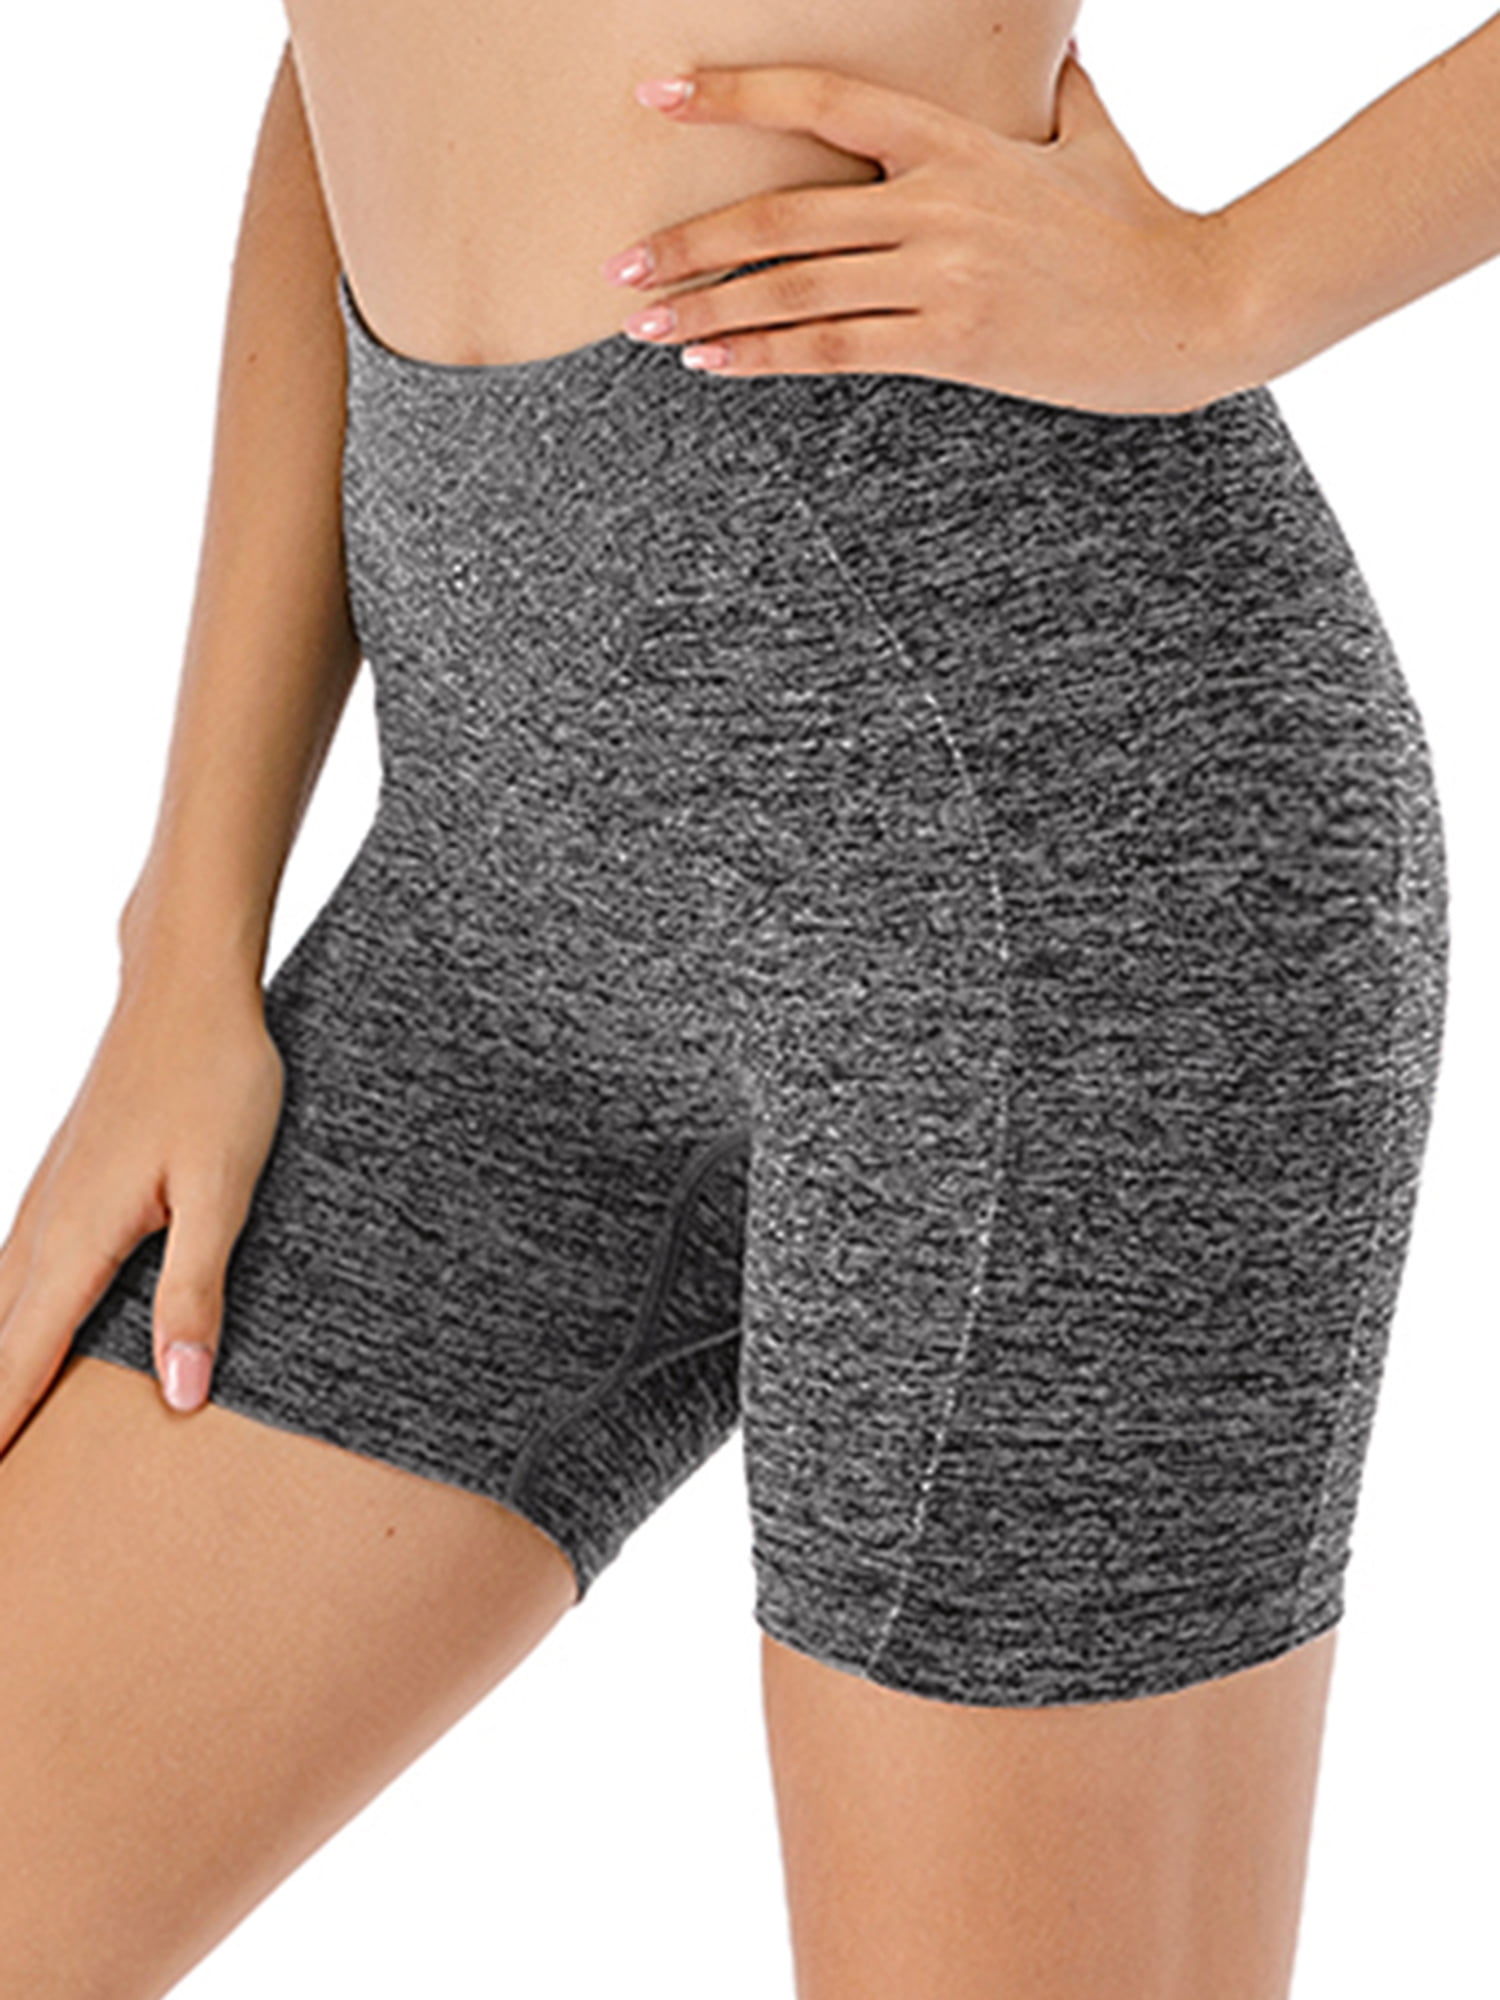 Bovodo High Waist Yoga Shorts with 4 Pockets Tummy Control Workout Sport Legging Non See-Through Yoga Shorts